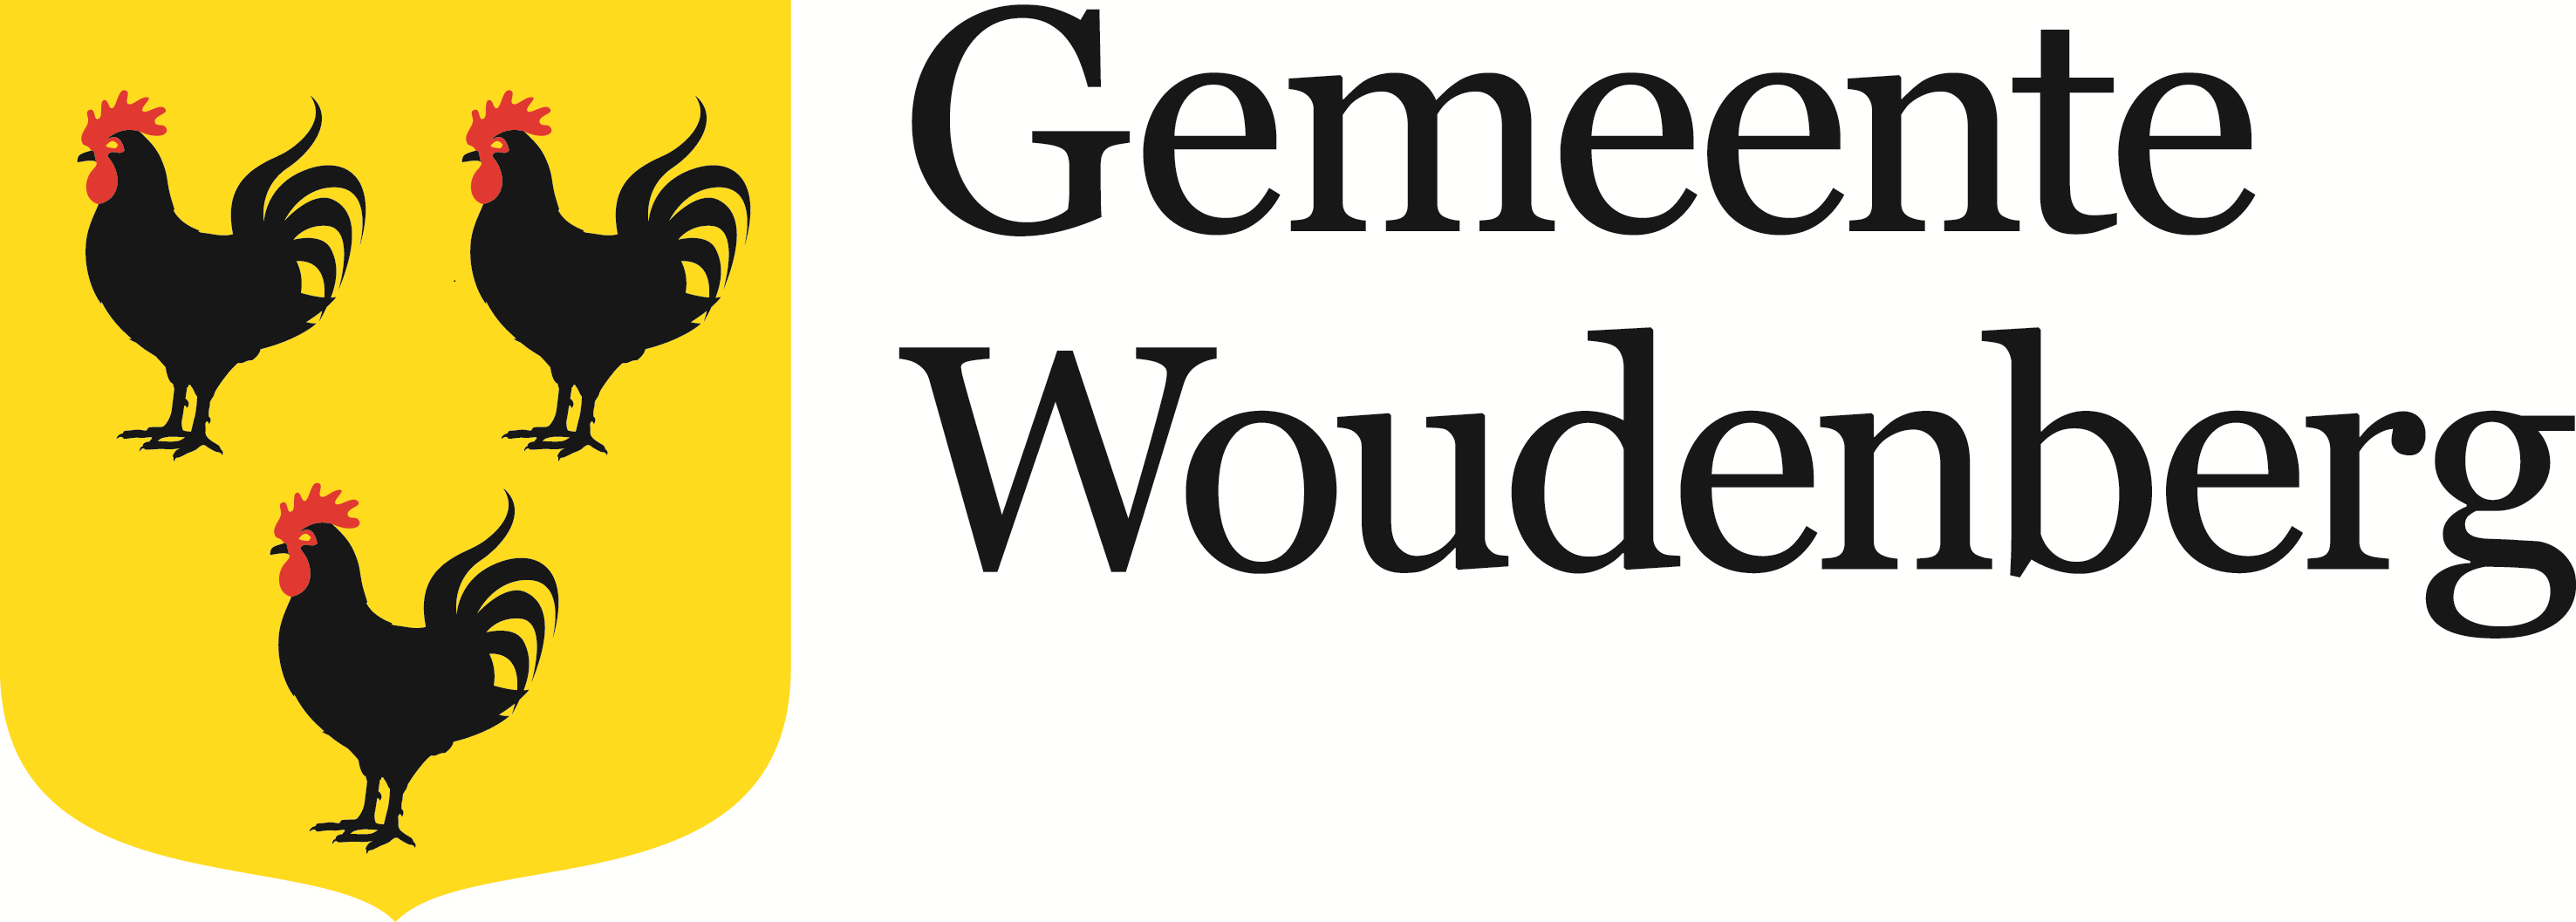 Logo Woudenberg